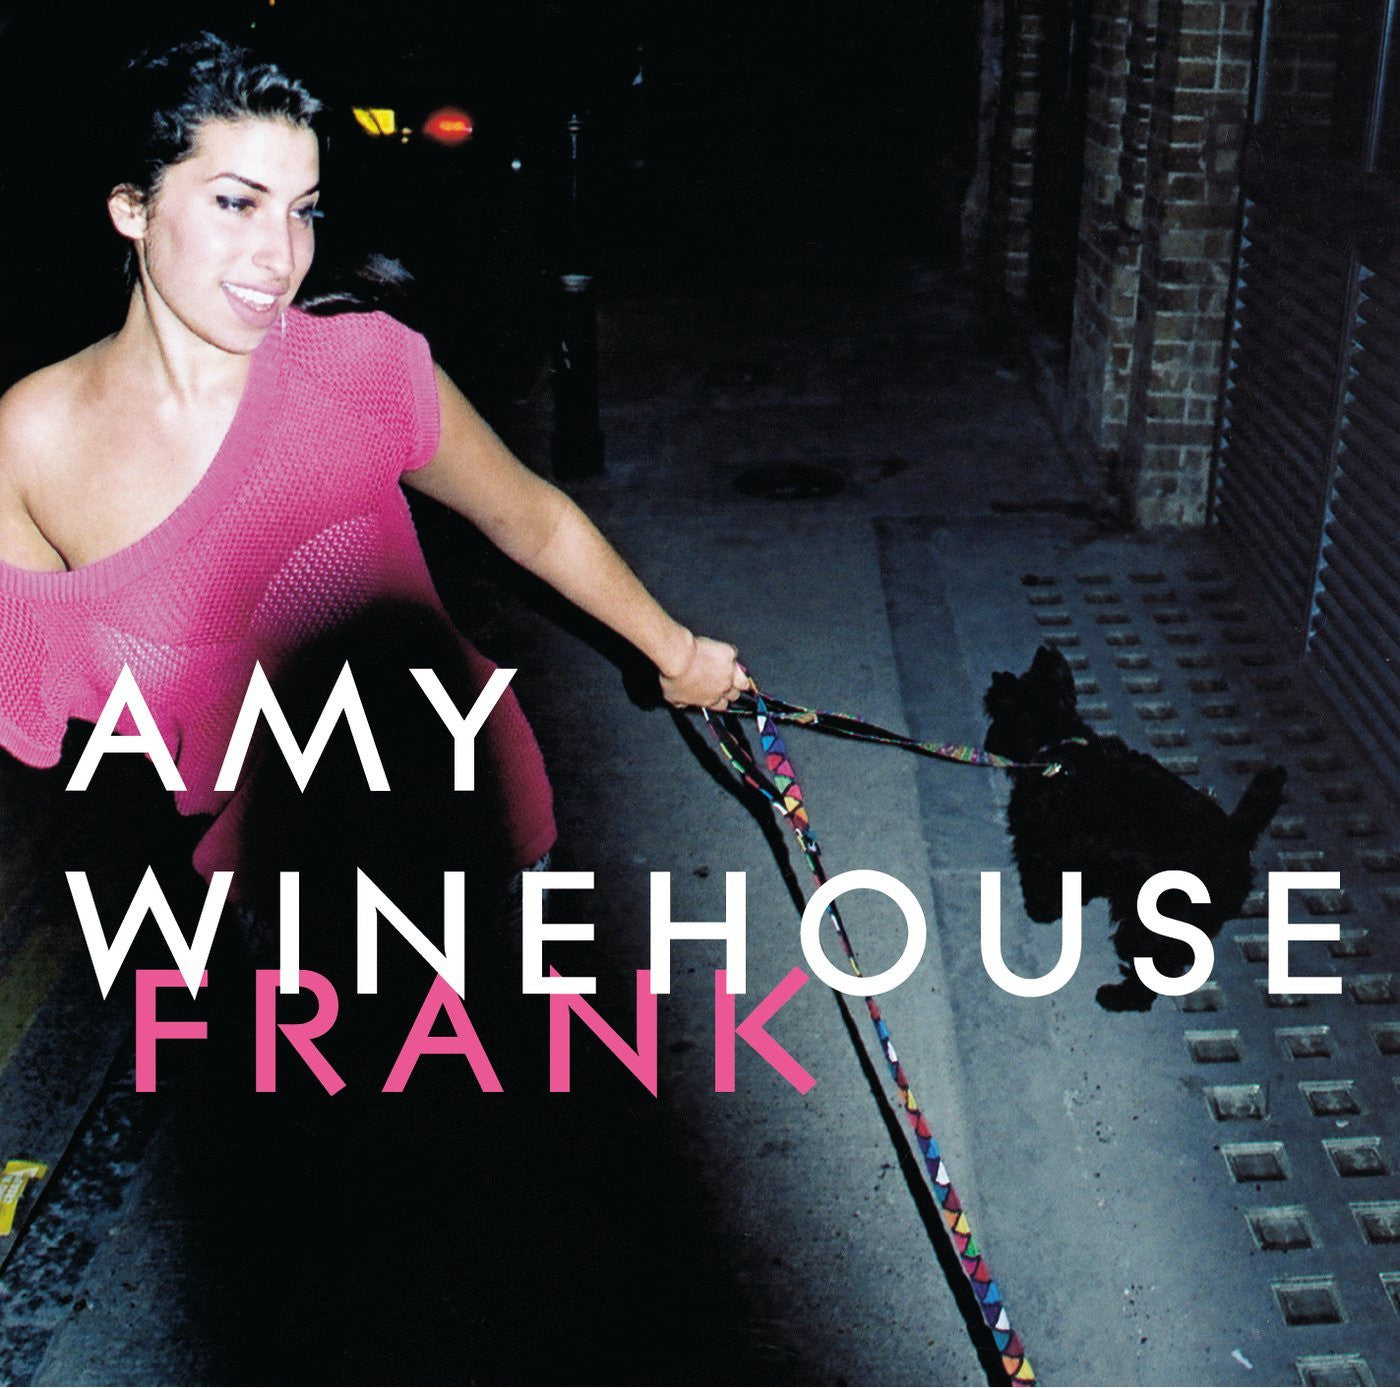 Amy Winehouse - Frank CD